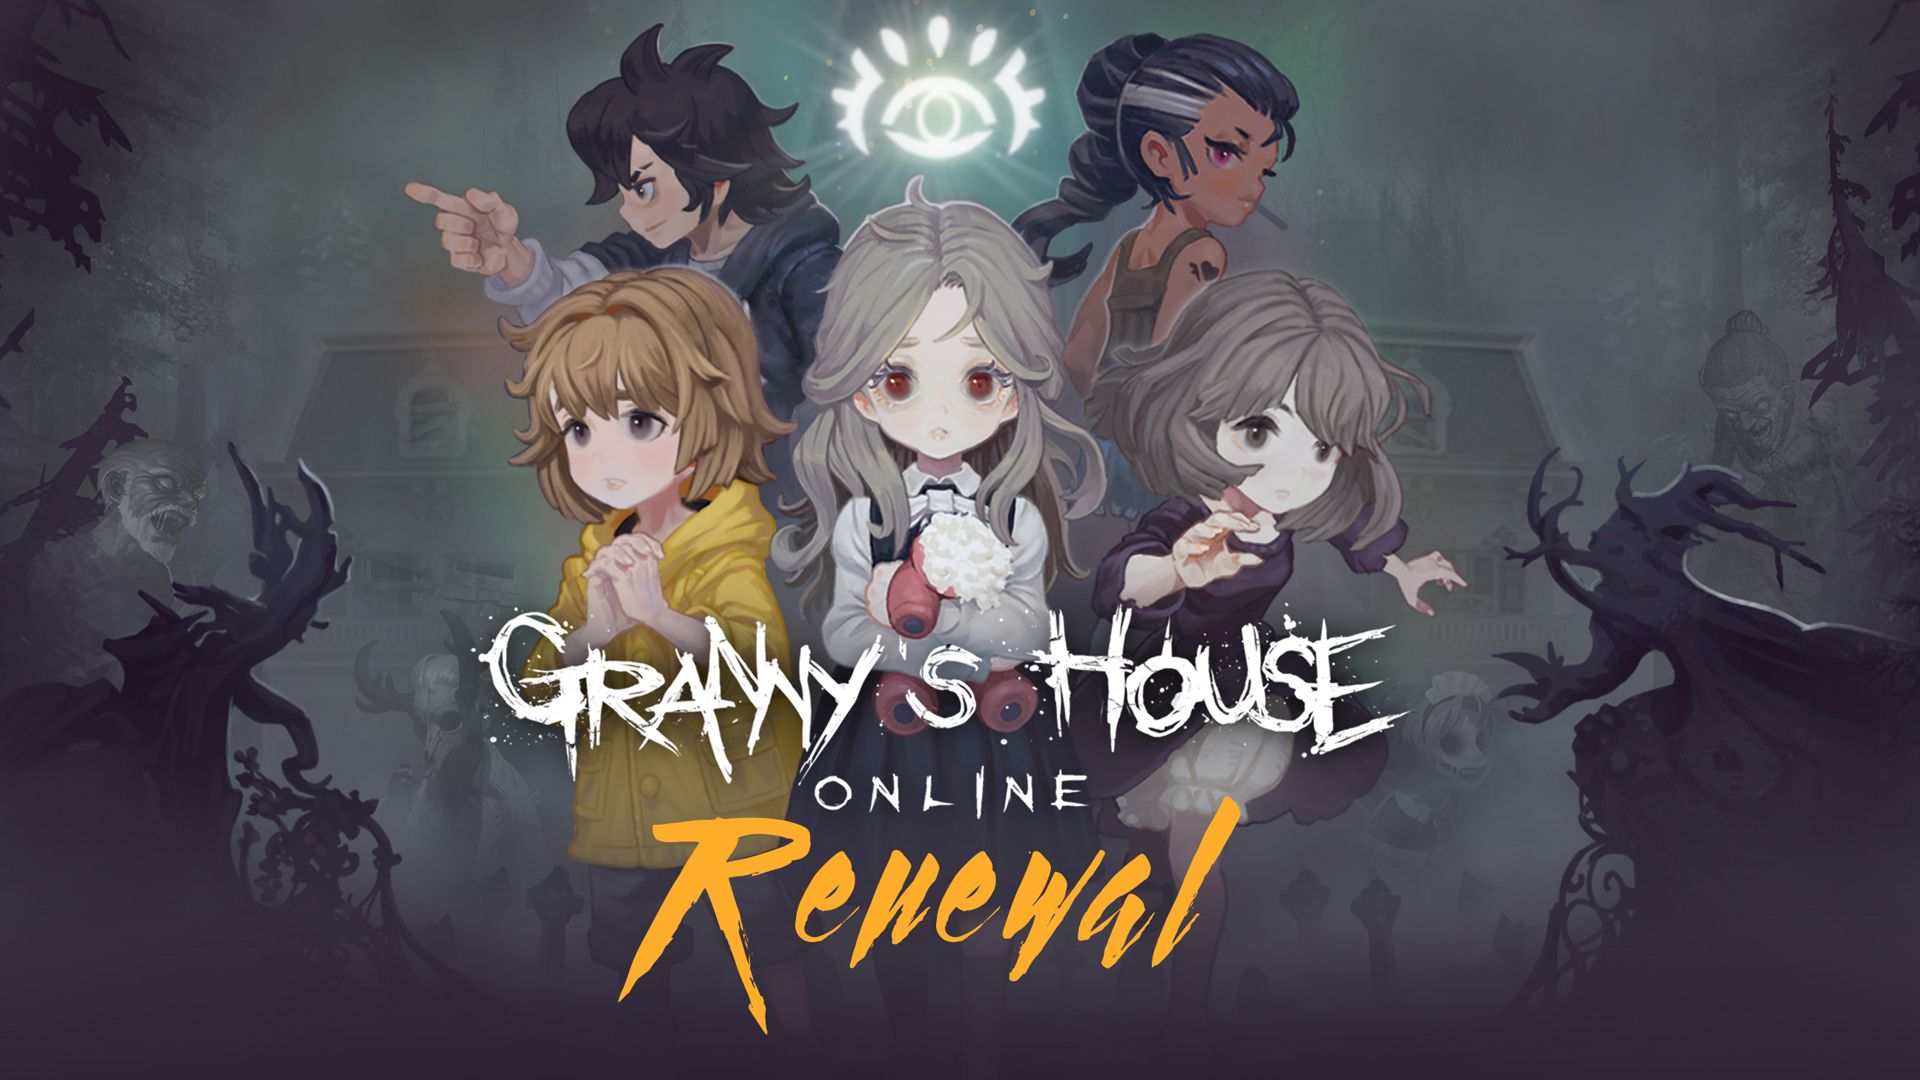 Granny's House Online